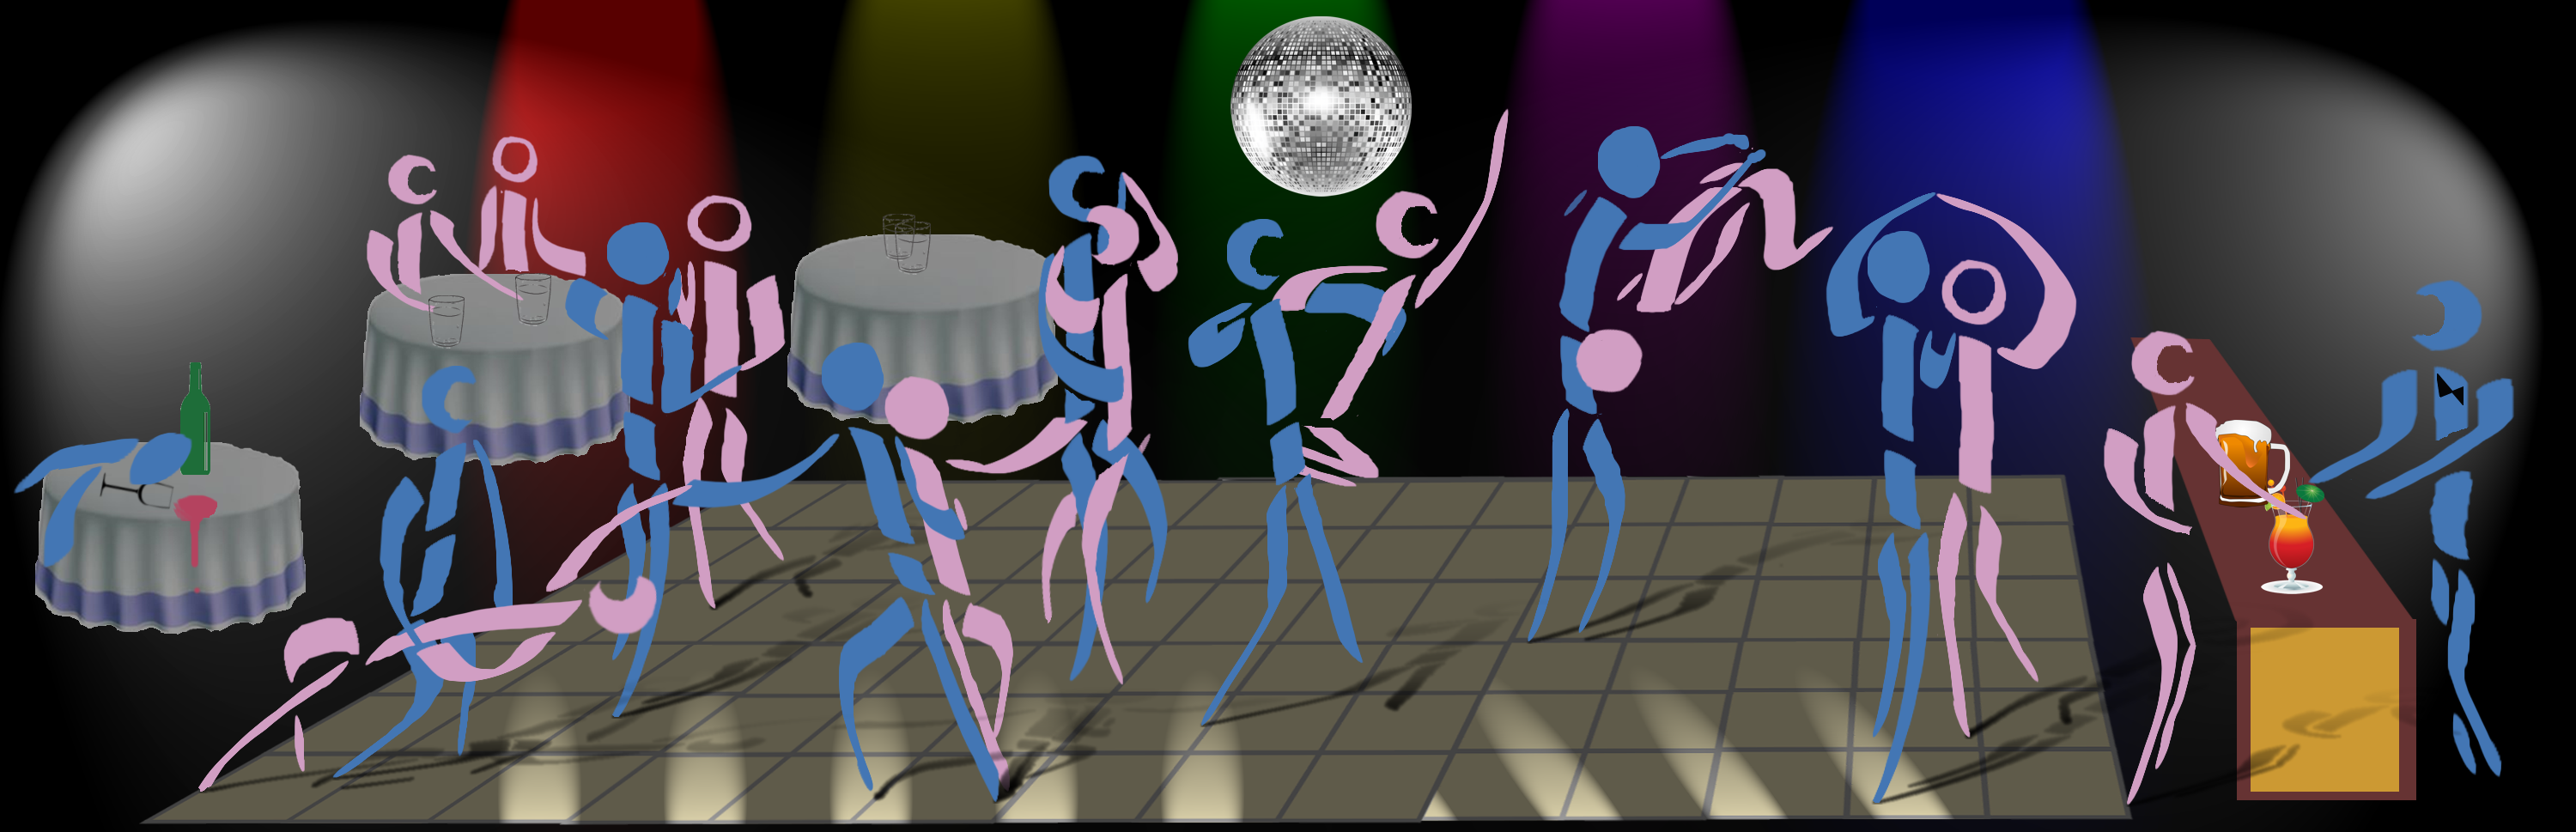 dancing venue illustration